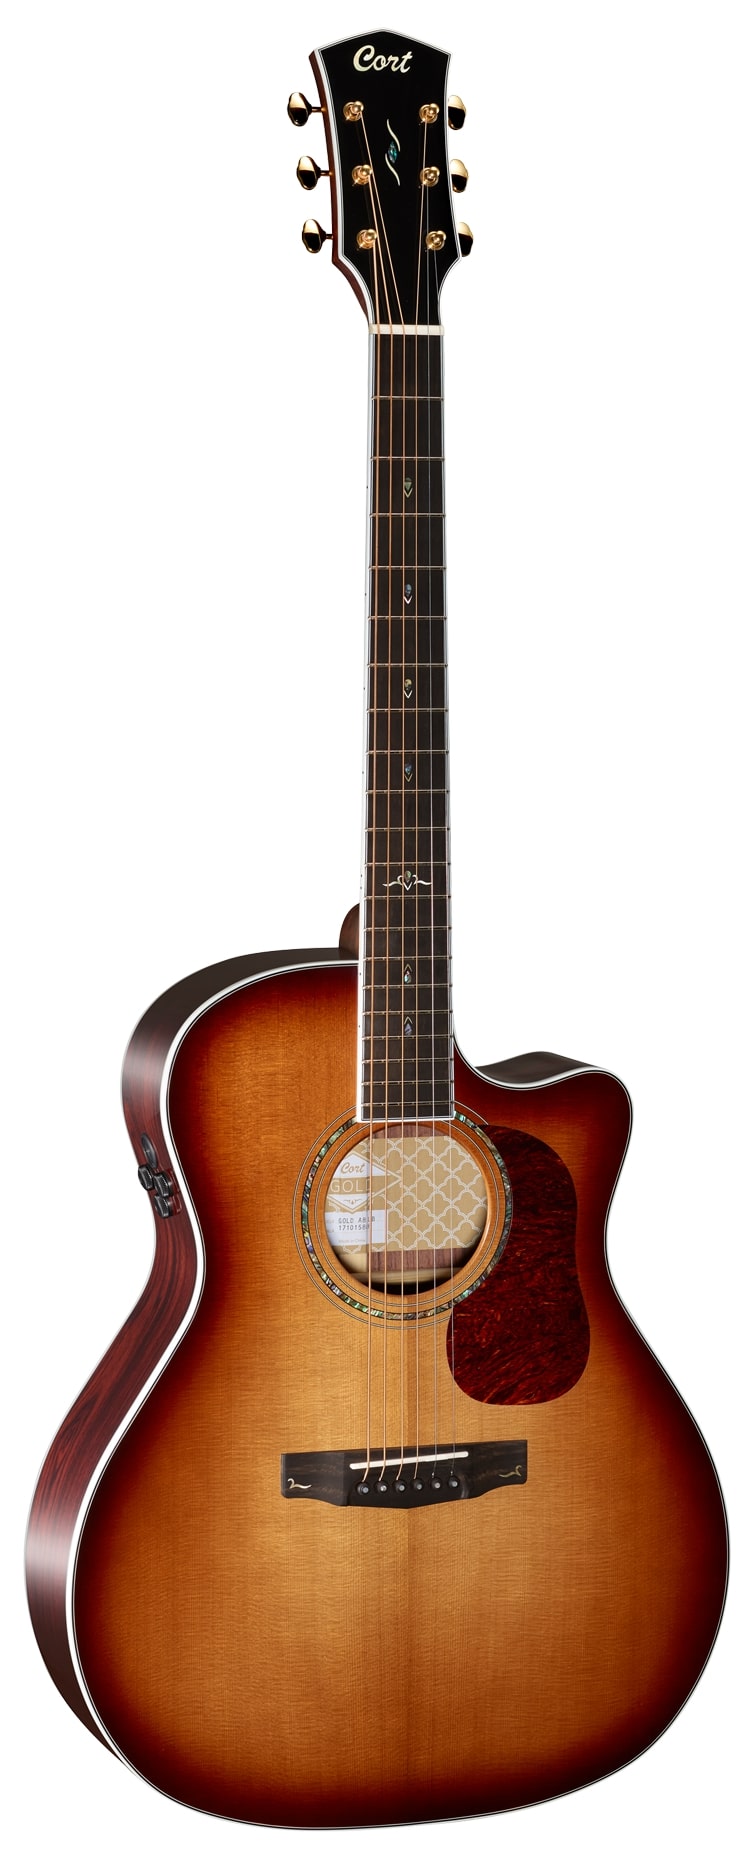 Электроакустические гитары Cort Gold-A8-WCASE-LB (чехол в комплекте) электрогитары cort g290 fat ii wbag tbb чехол в комплекте